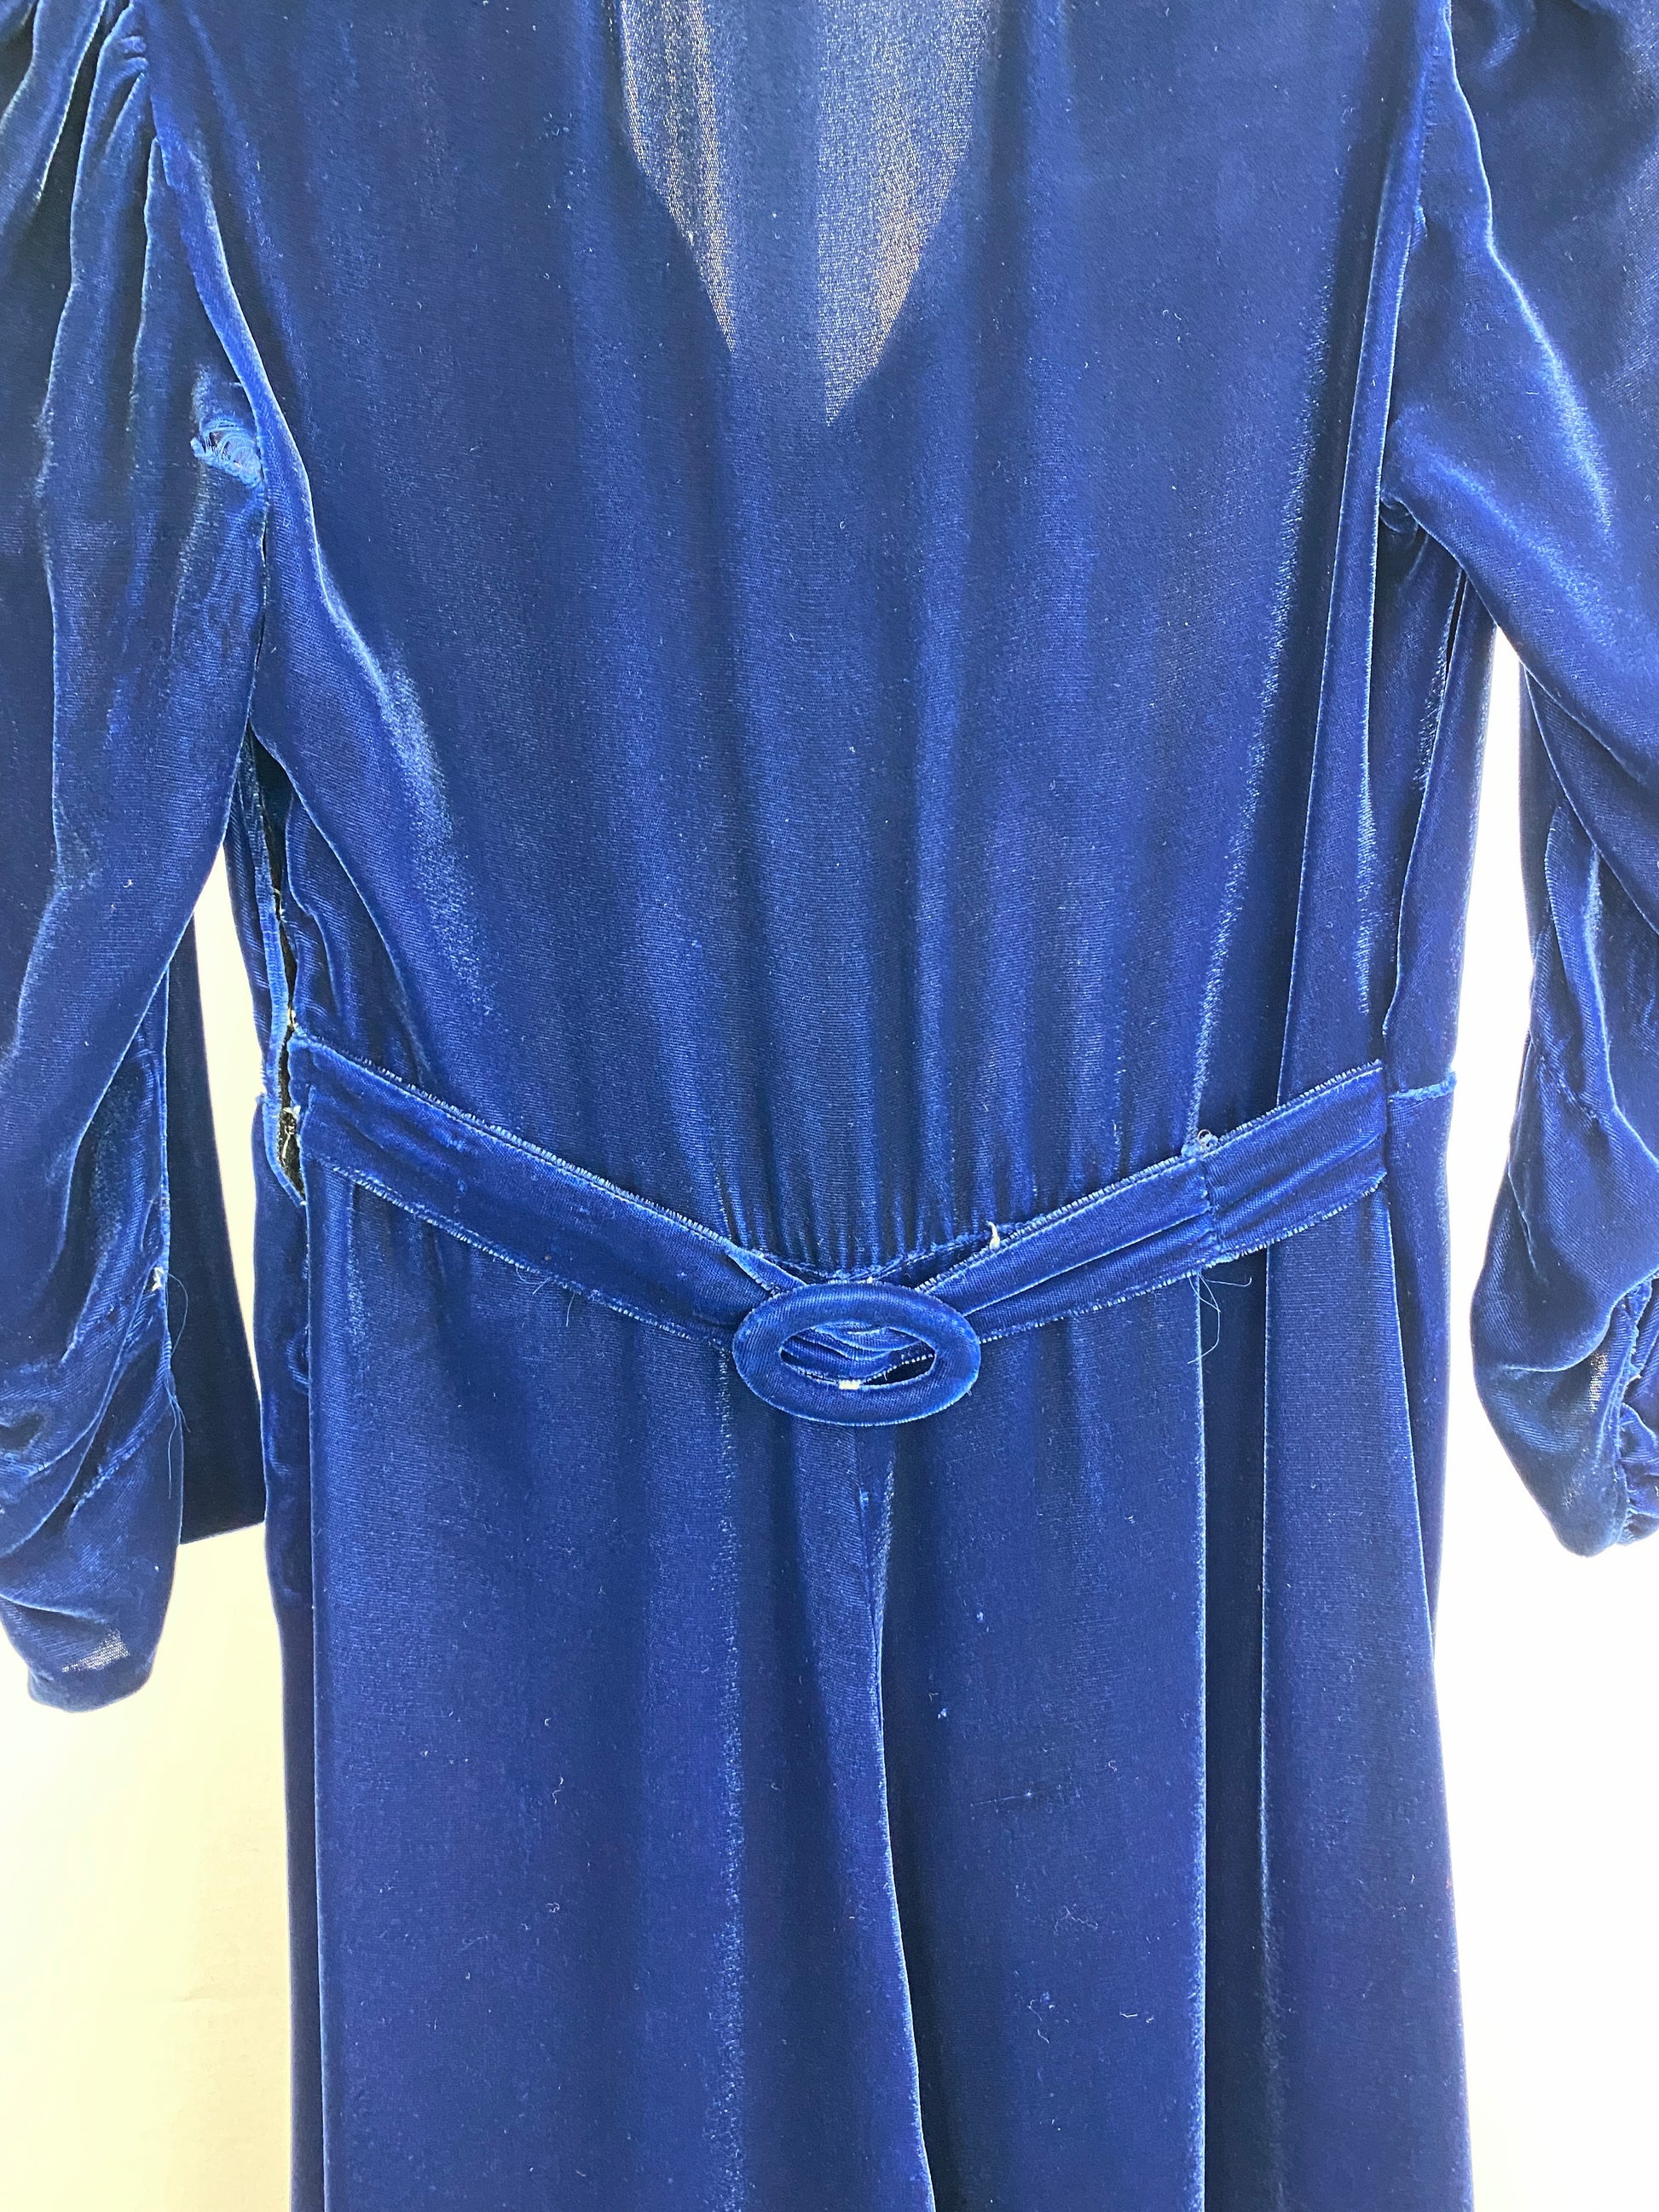 Vintage 1940s Blue Velvet Cocktail Dress, Ruched Sleeves, Small